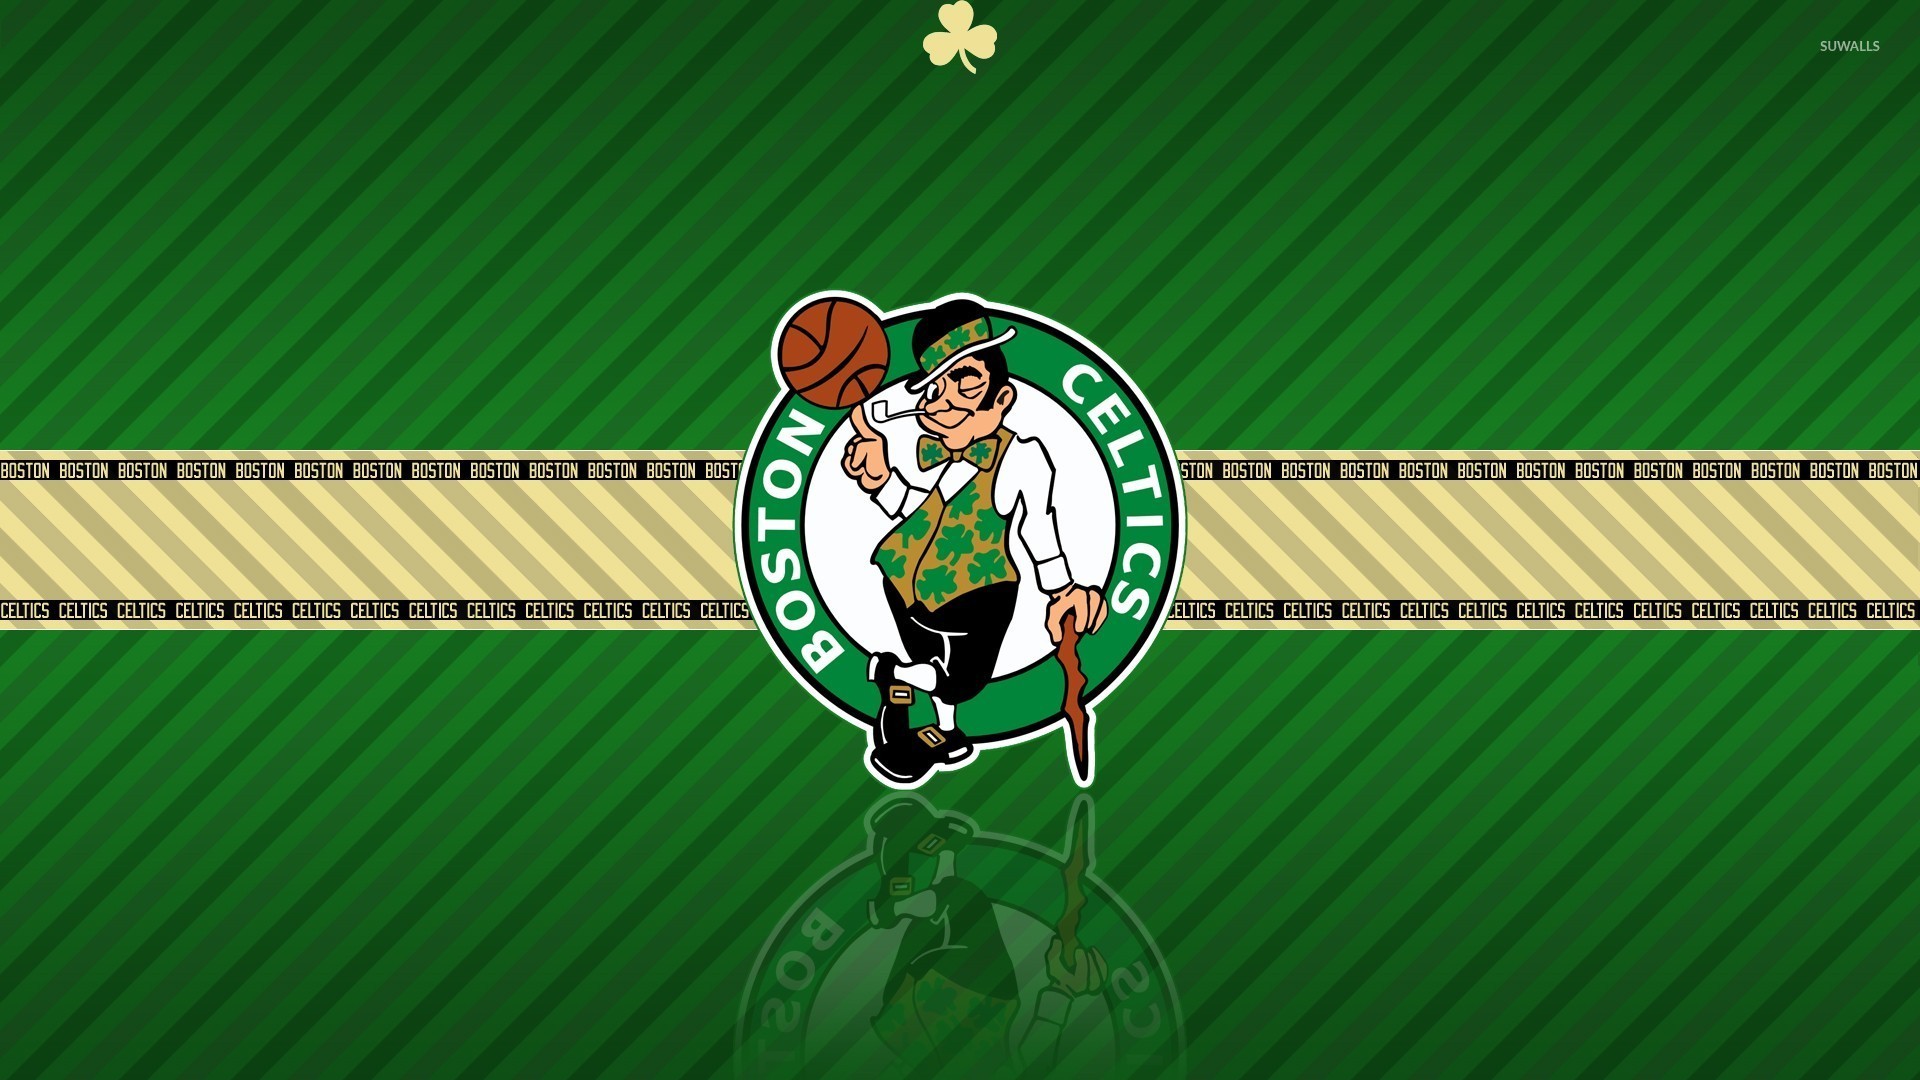 1920x1080 Boston Celtics logo wallpaper  jpg